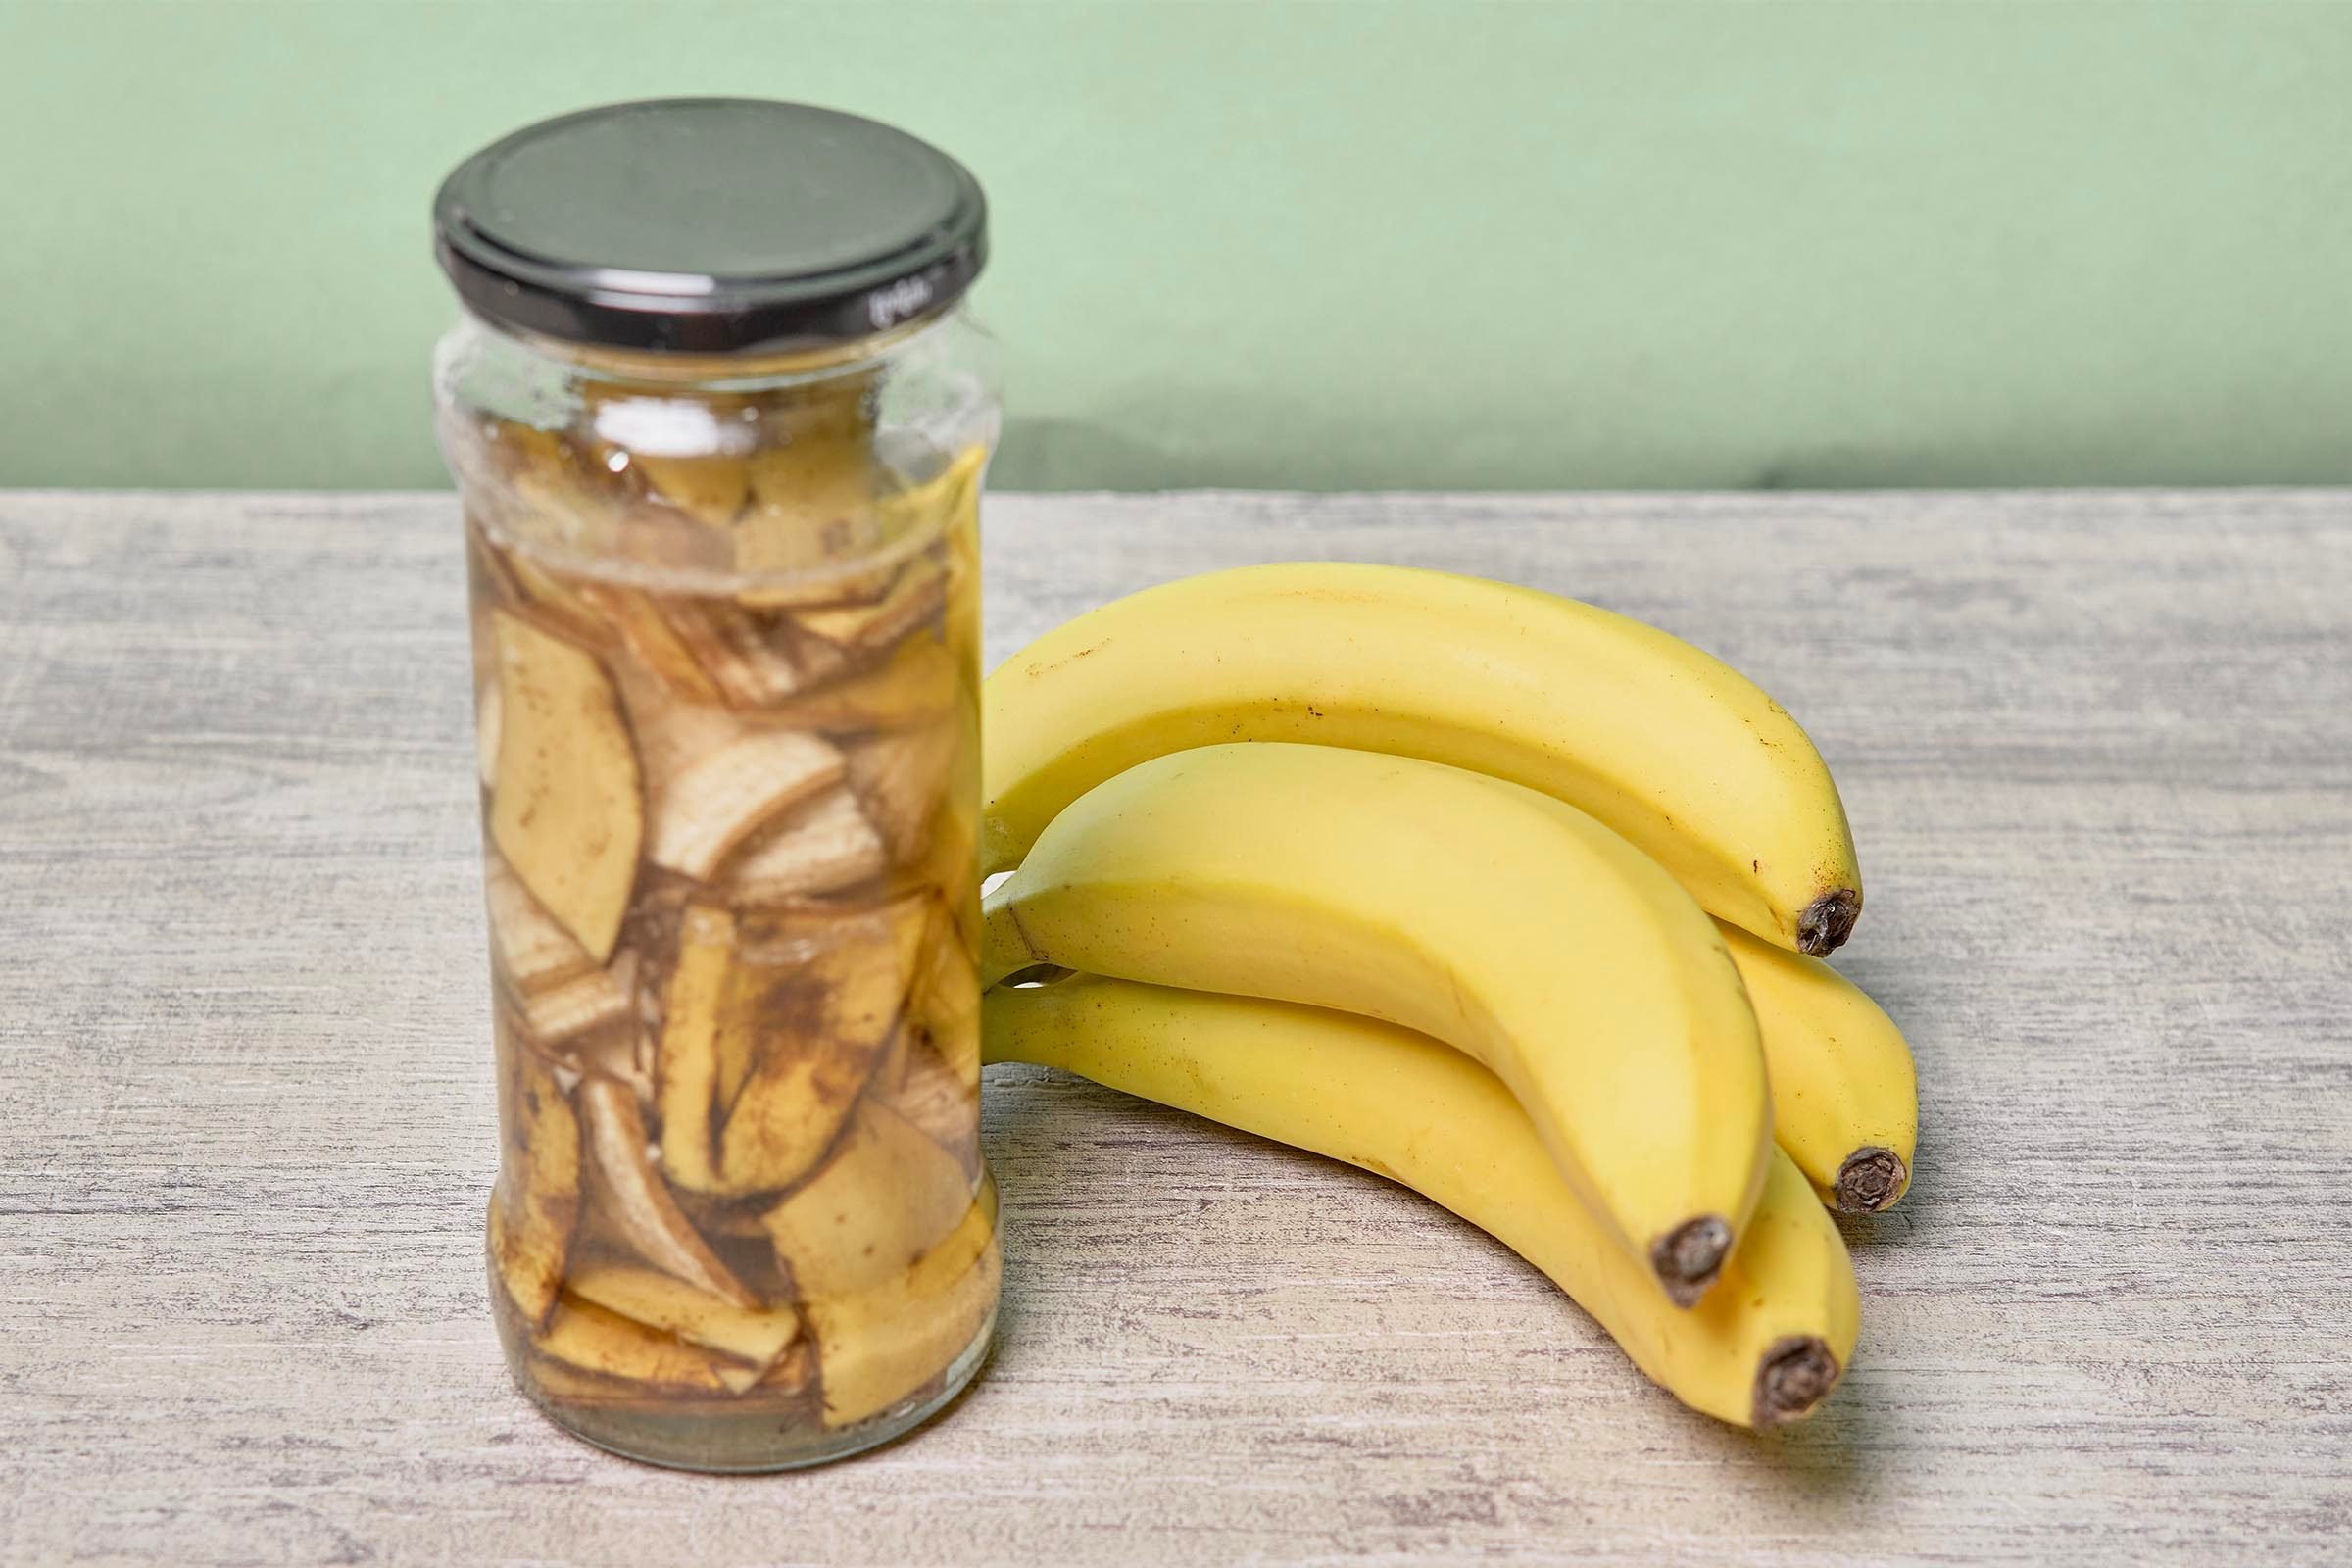 Organic Banana - Eat the world better